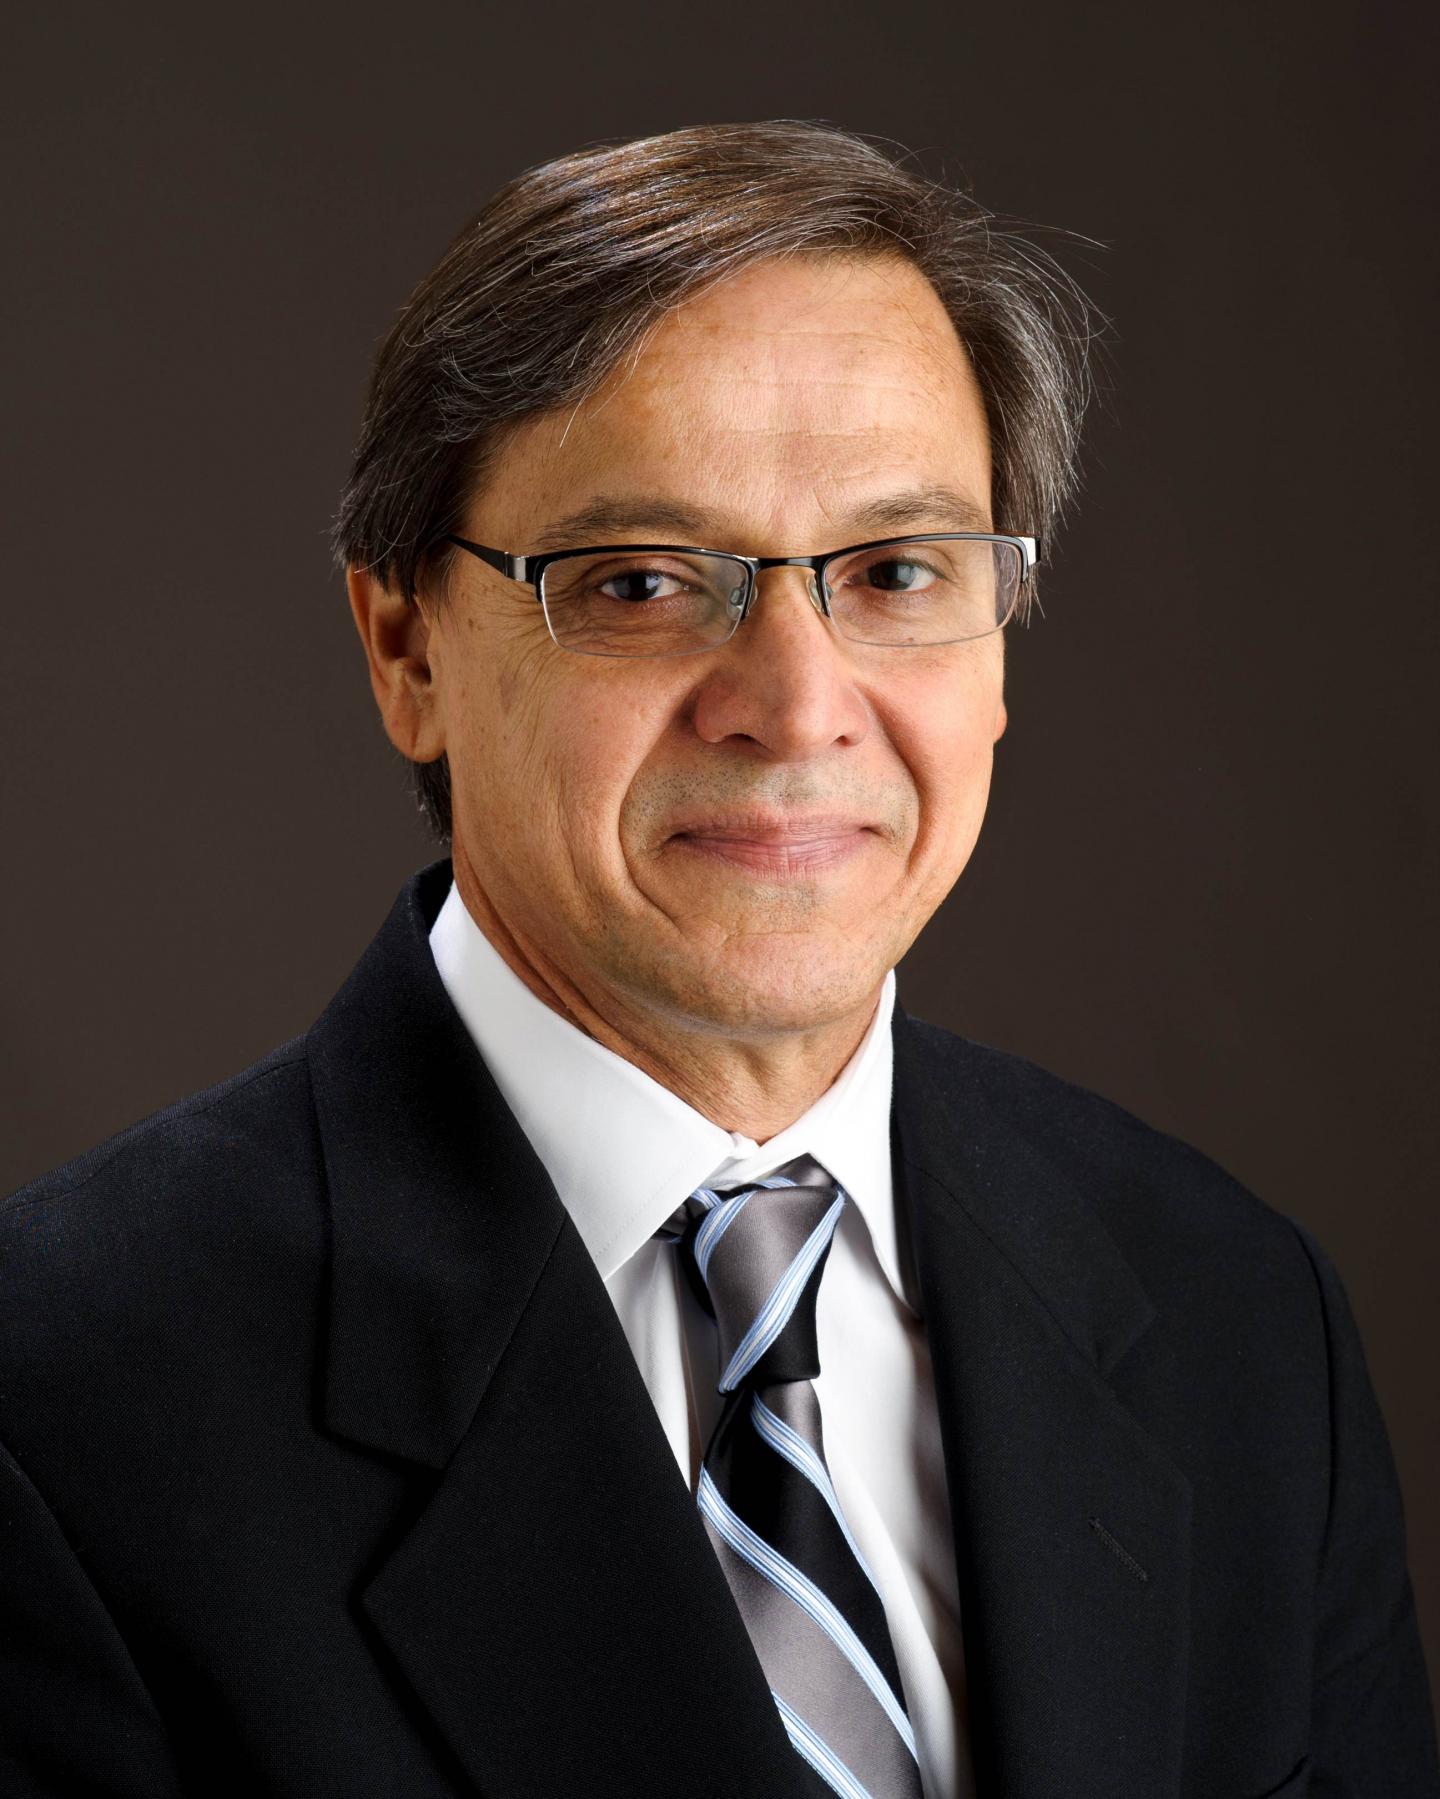 Eduardo Simoes, M.D., University of Missouri-Columbia